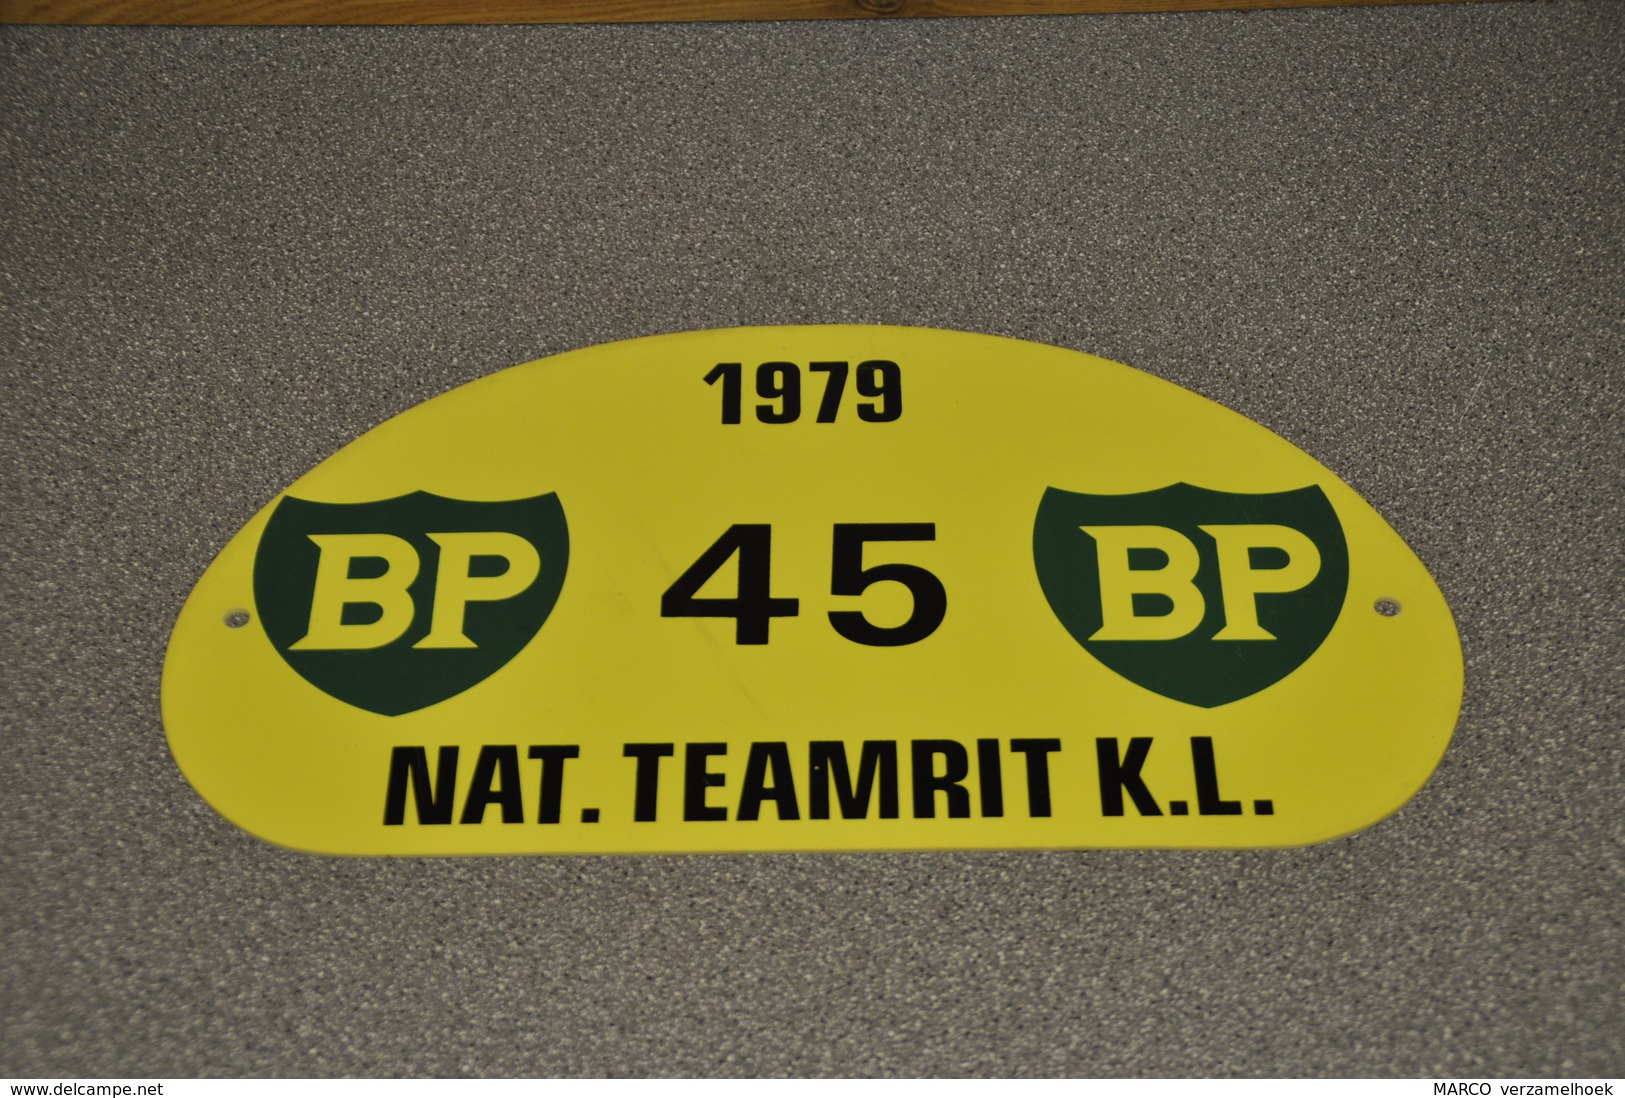 Rally Plaat-rallye Plaque Plastic: Nat. Teamrit K.L. 1979 BP - Rally-affiches